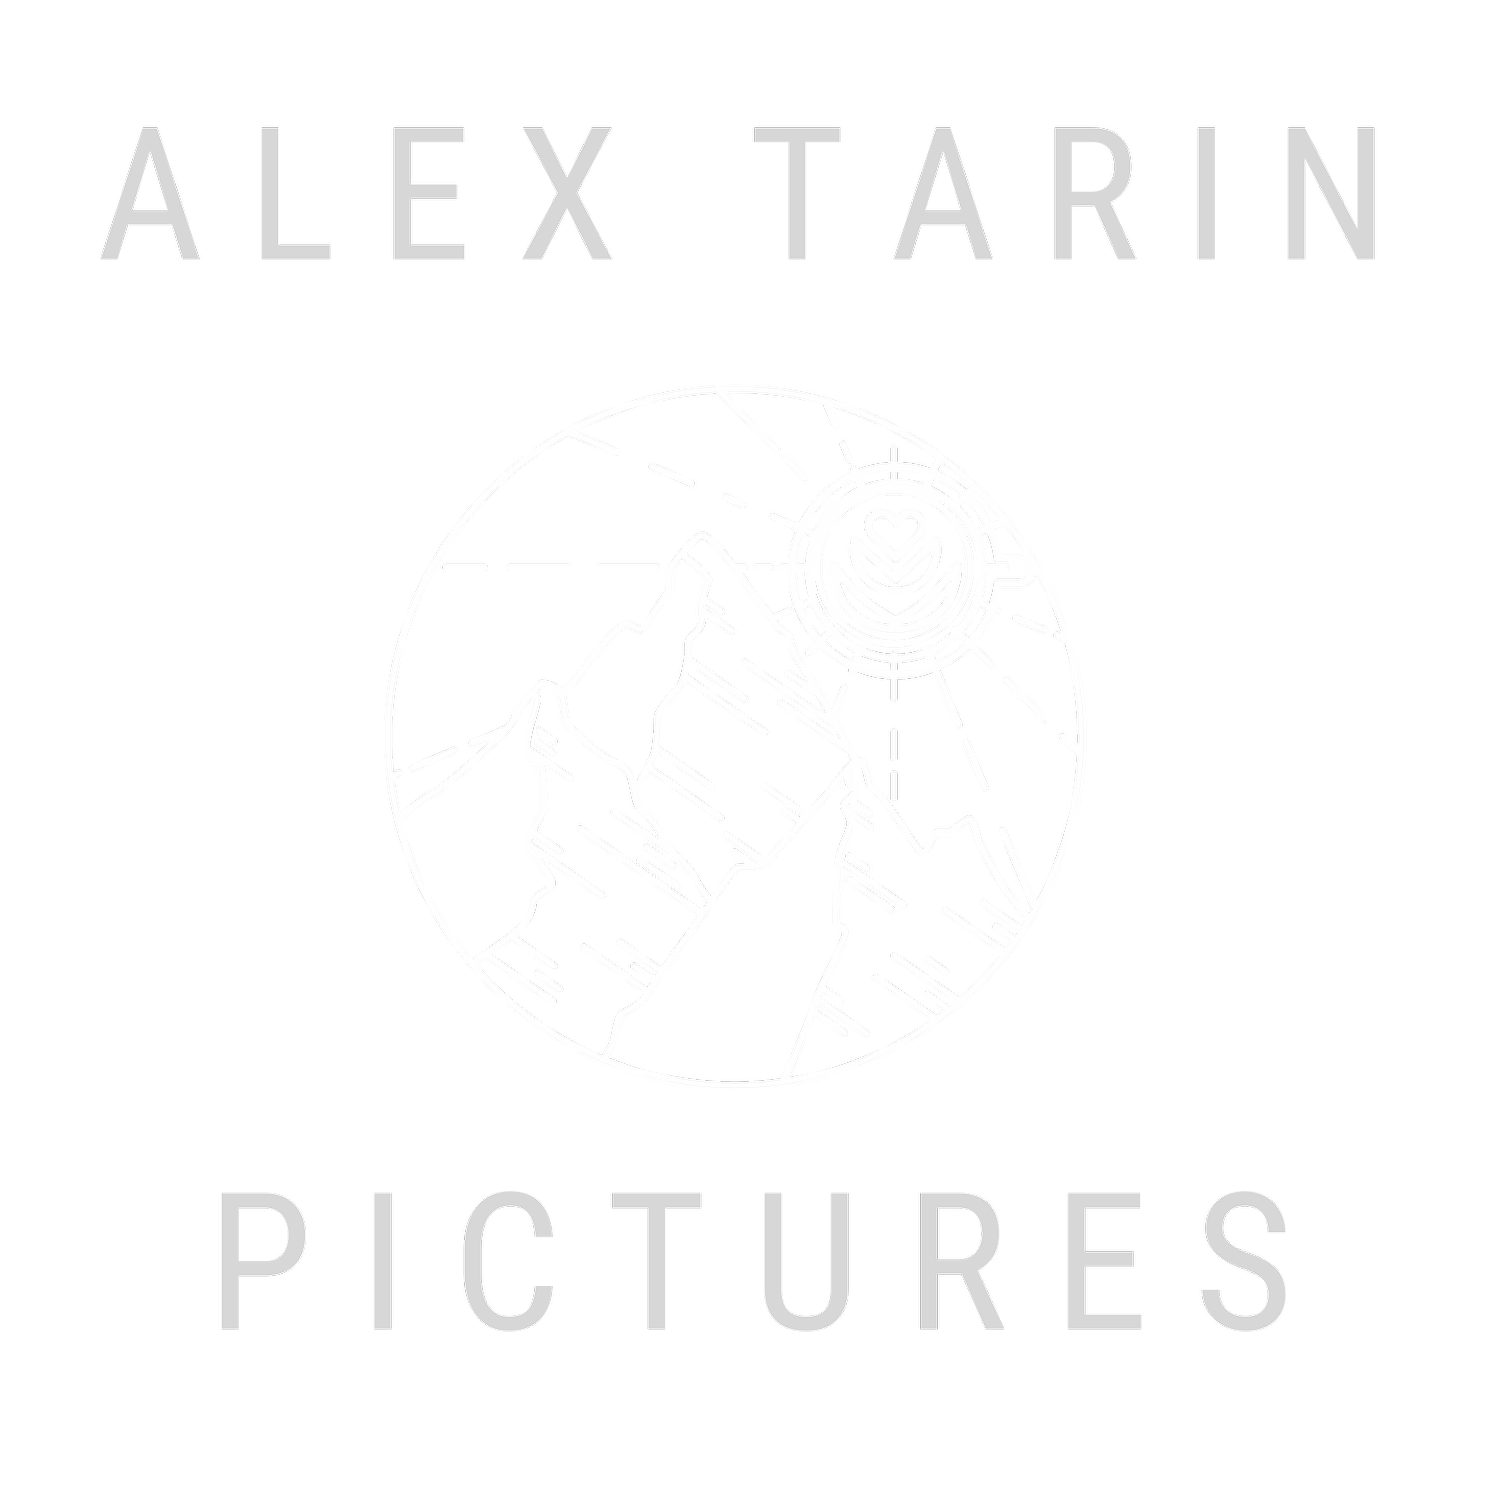 Alex Tarin Pictures